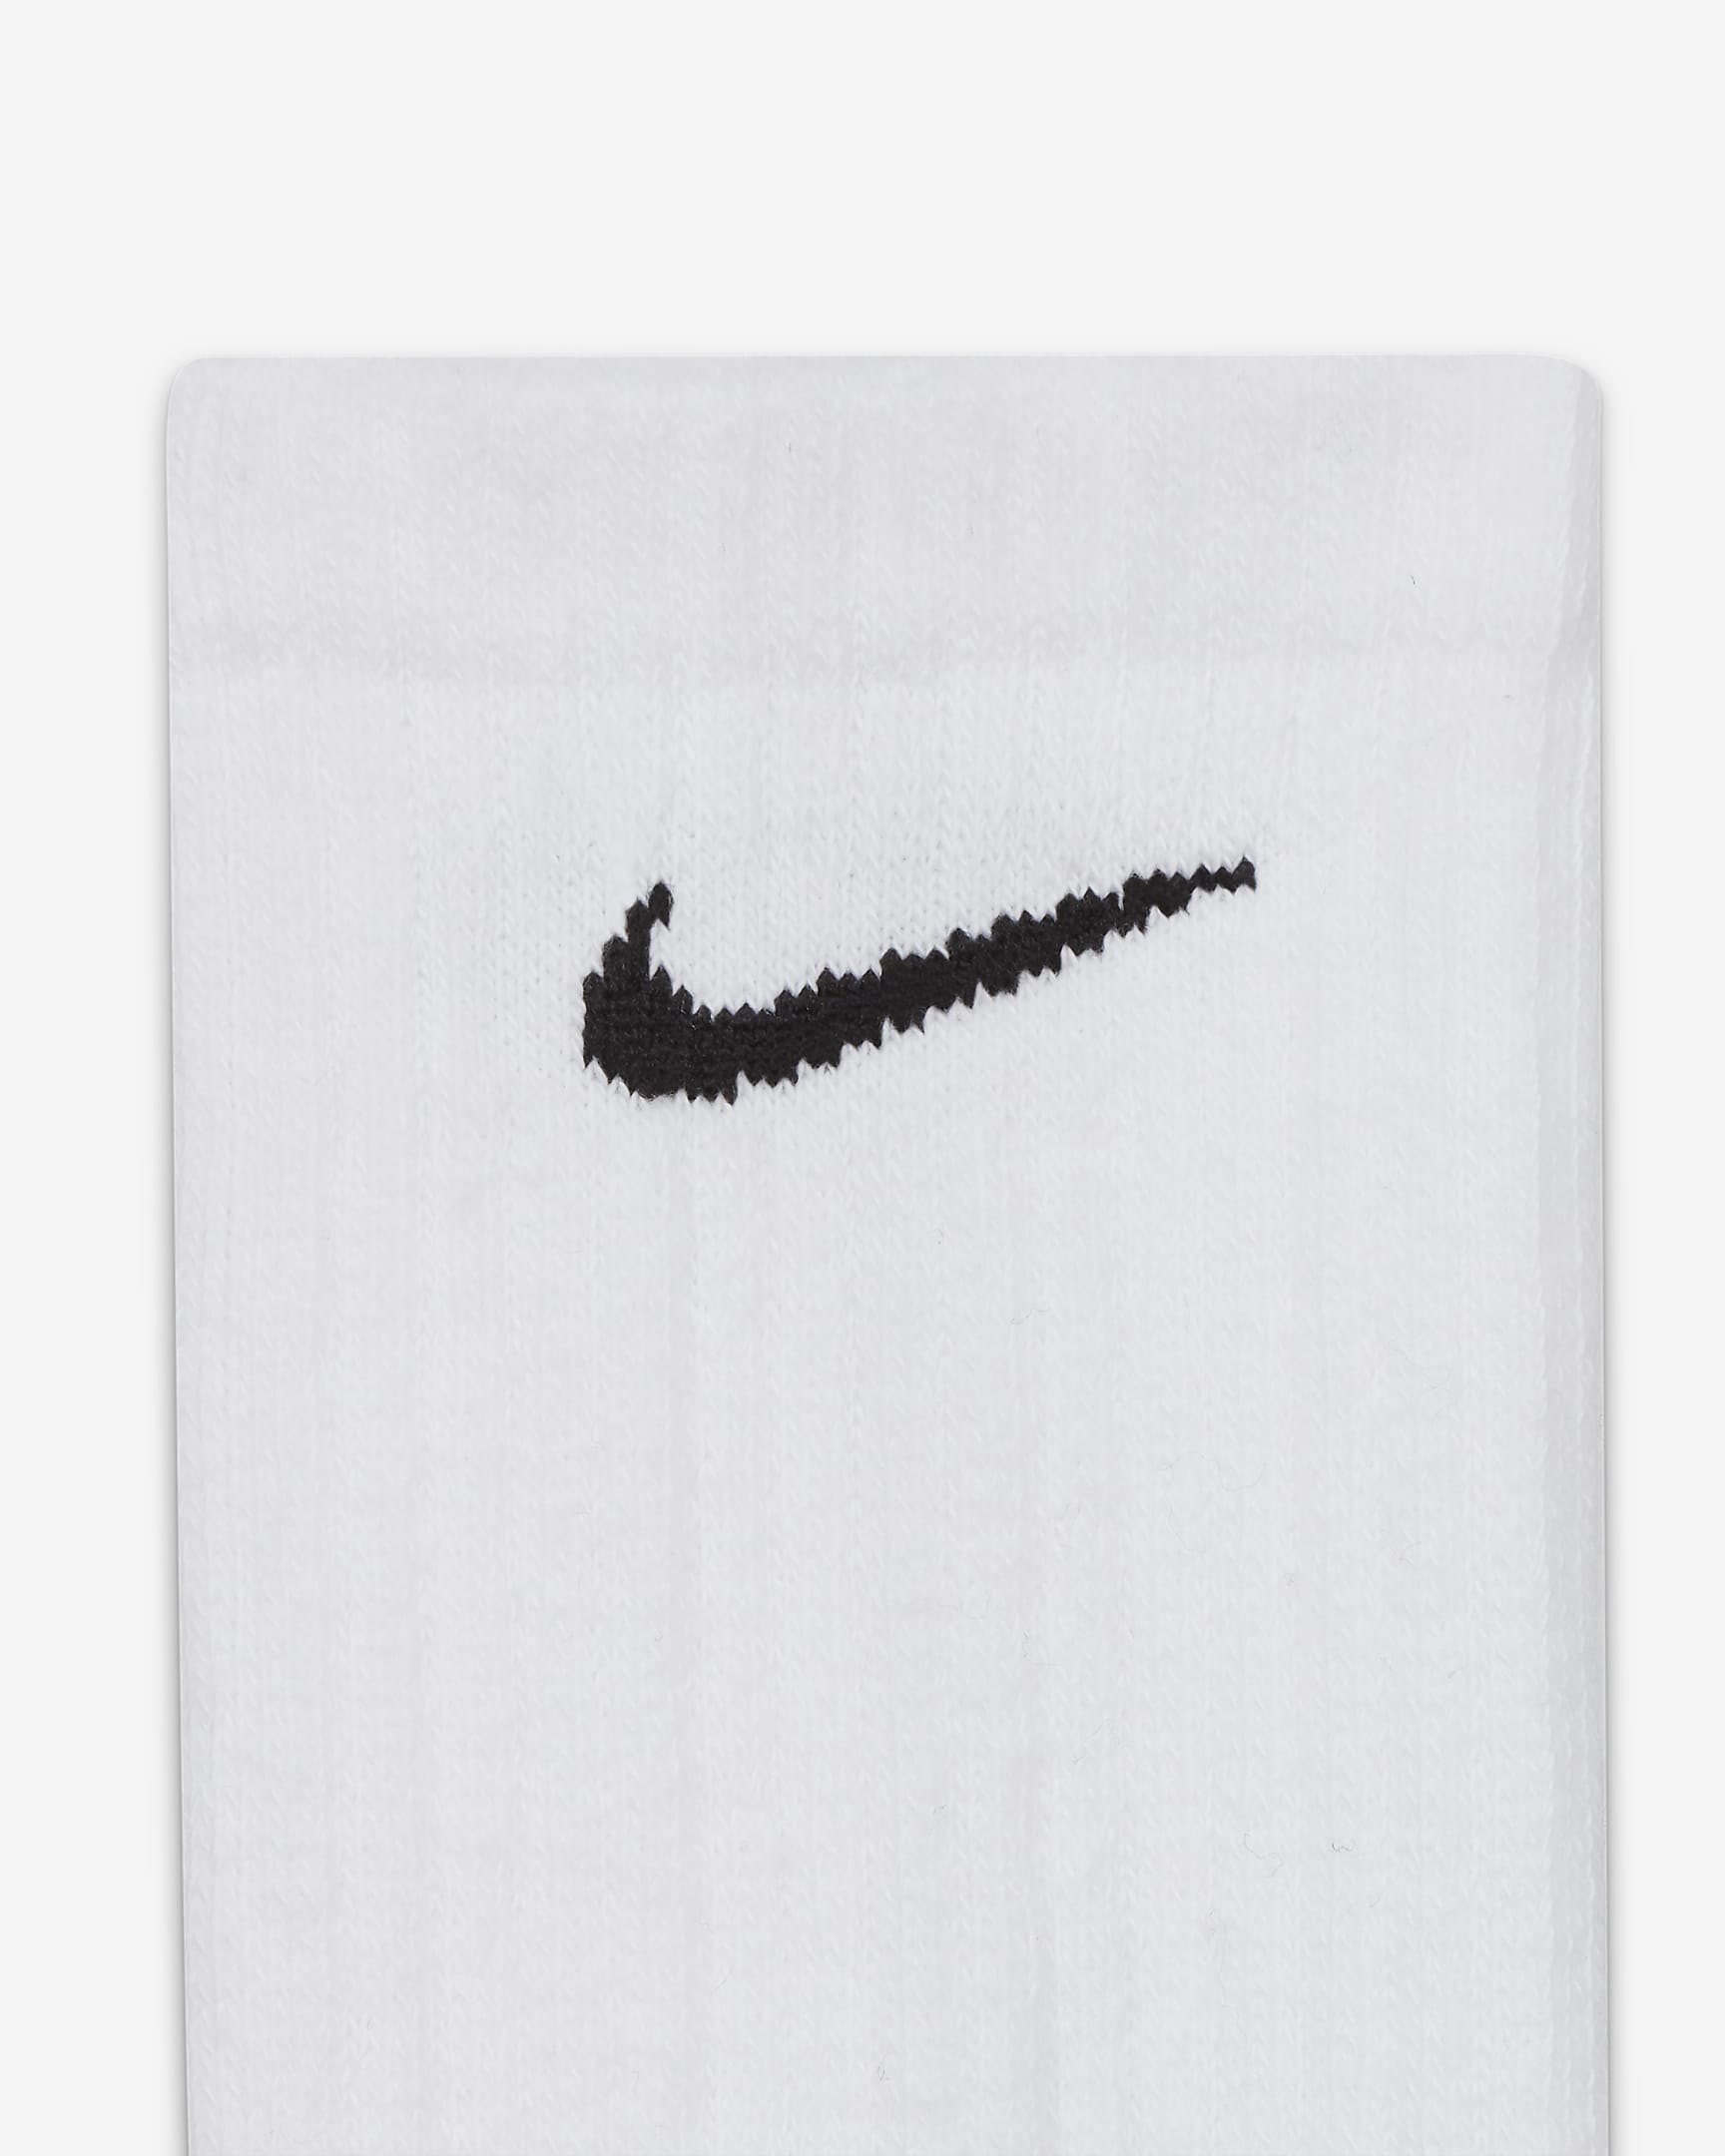 Nike Everyday Cushioned Training Crew Socks (3 Pairs) - Multi-Colour